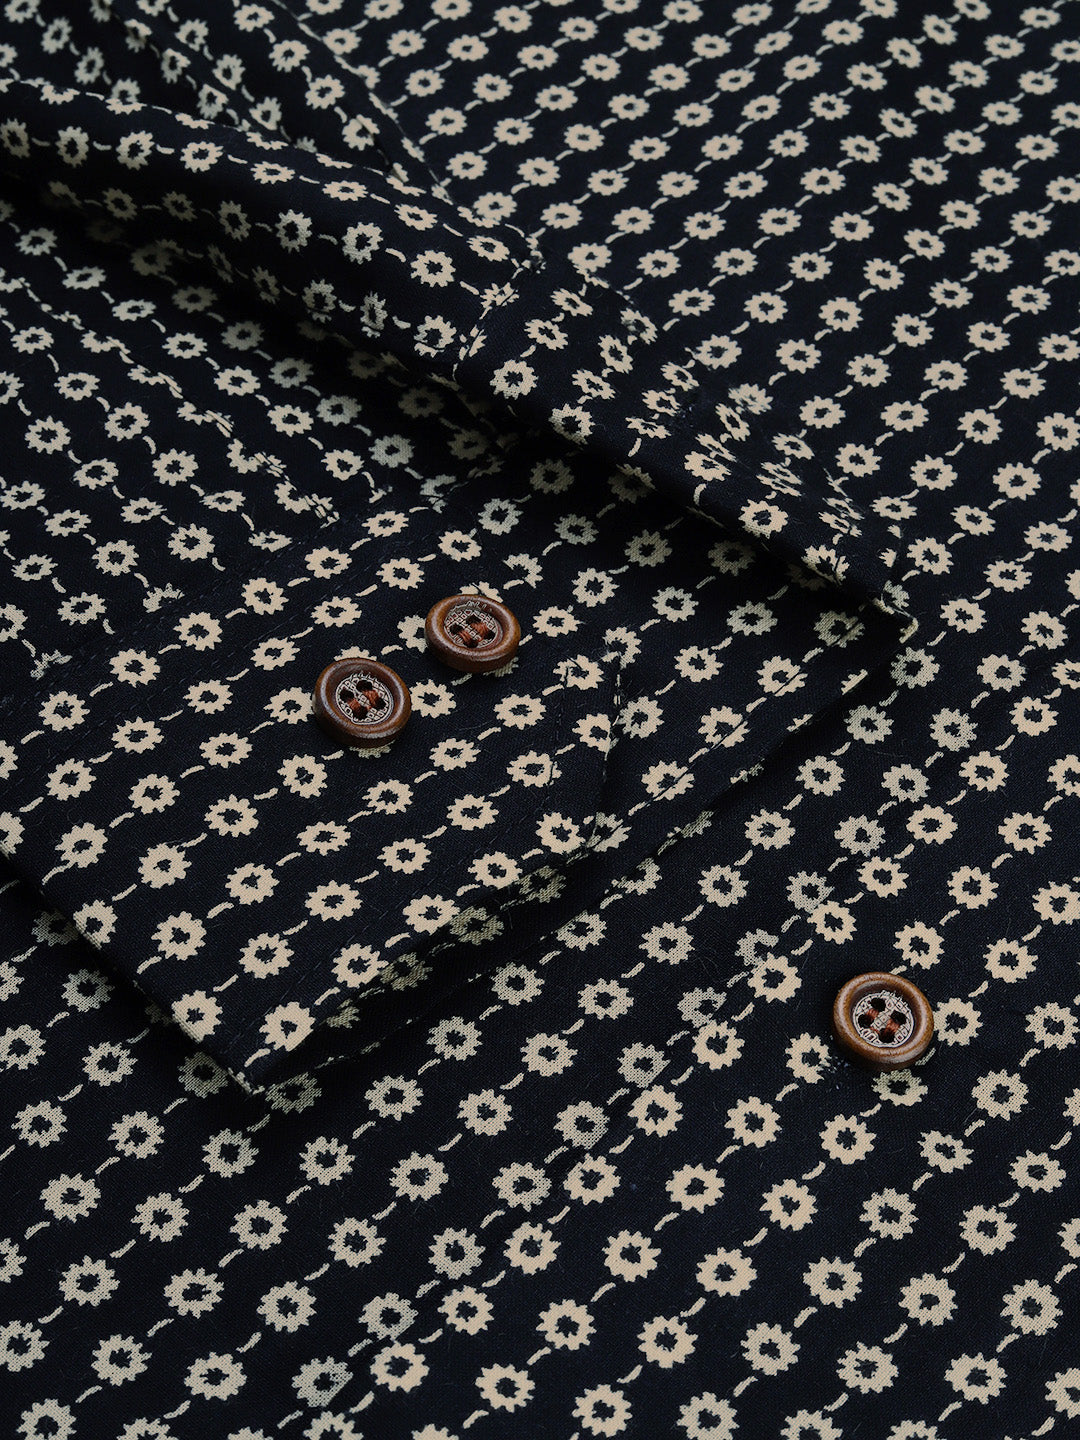 Black Cotton Full Sleeves Shirts For Men-MMF0230 - NOZ2TOZ